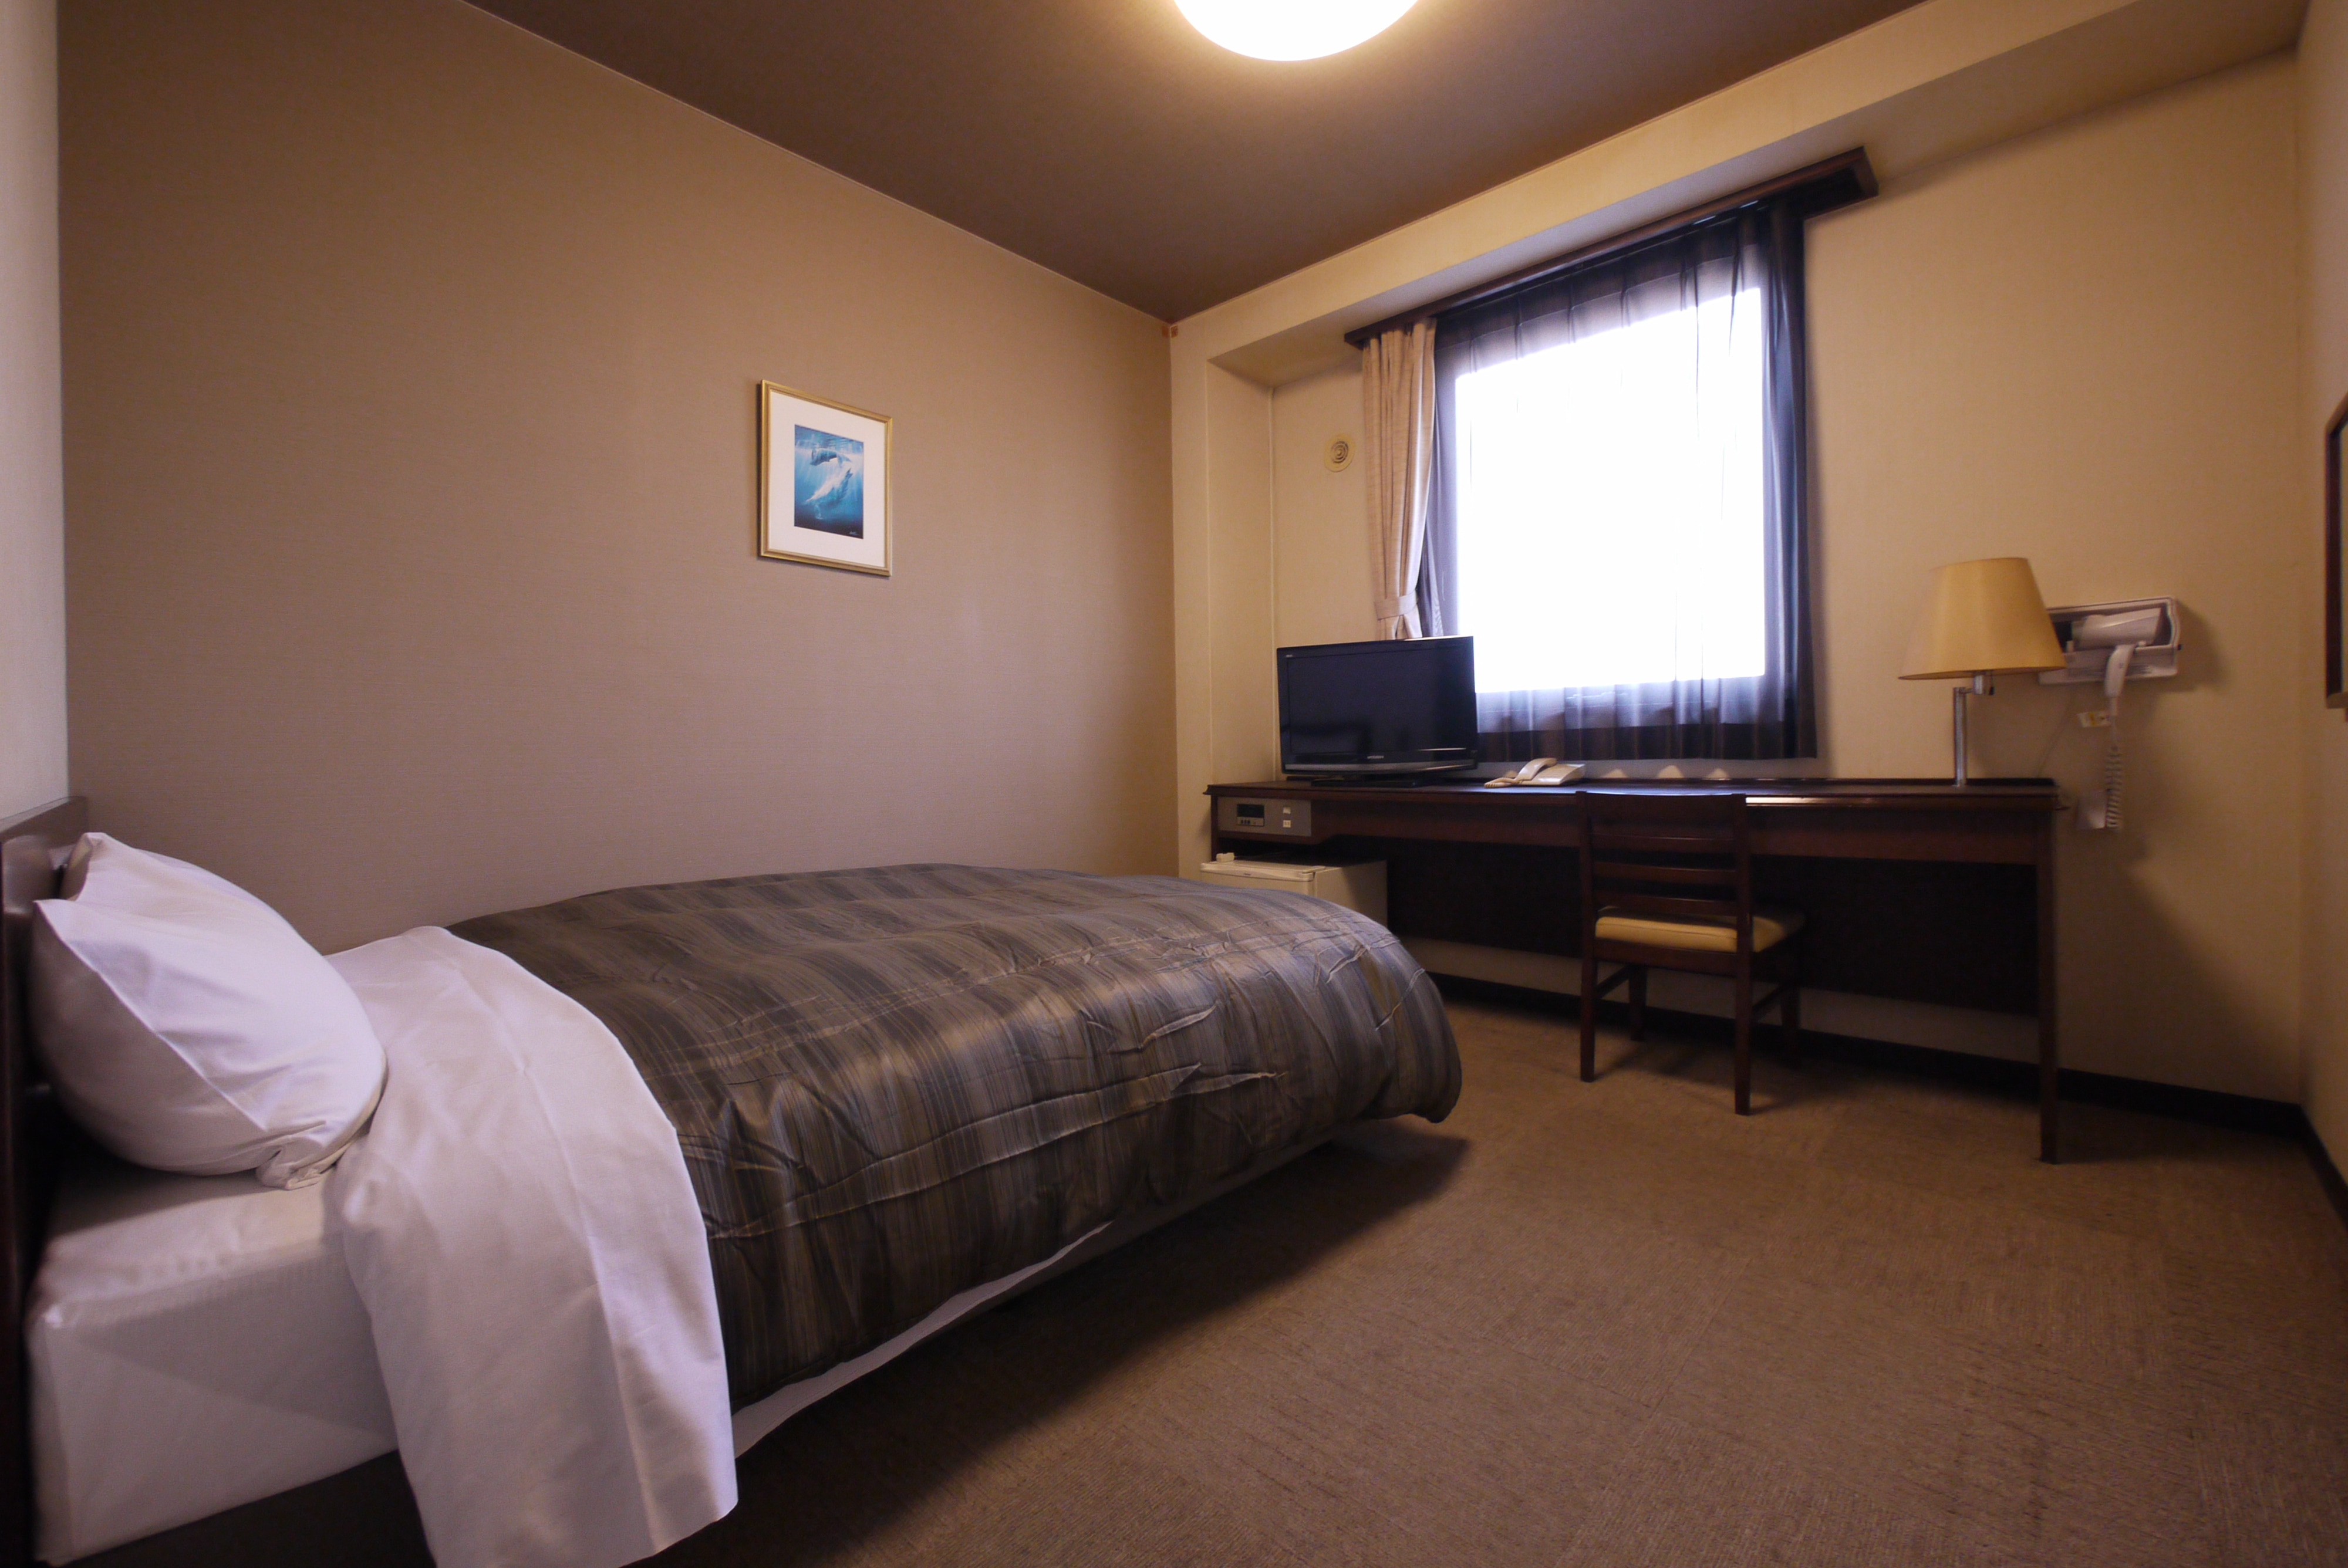 Tempat tidur double room ukuran 140 cm & kali; 196 cm WOWOW bisa ditonton gratis